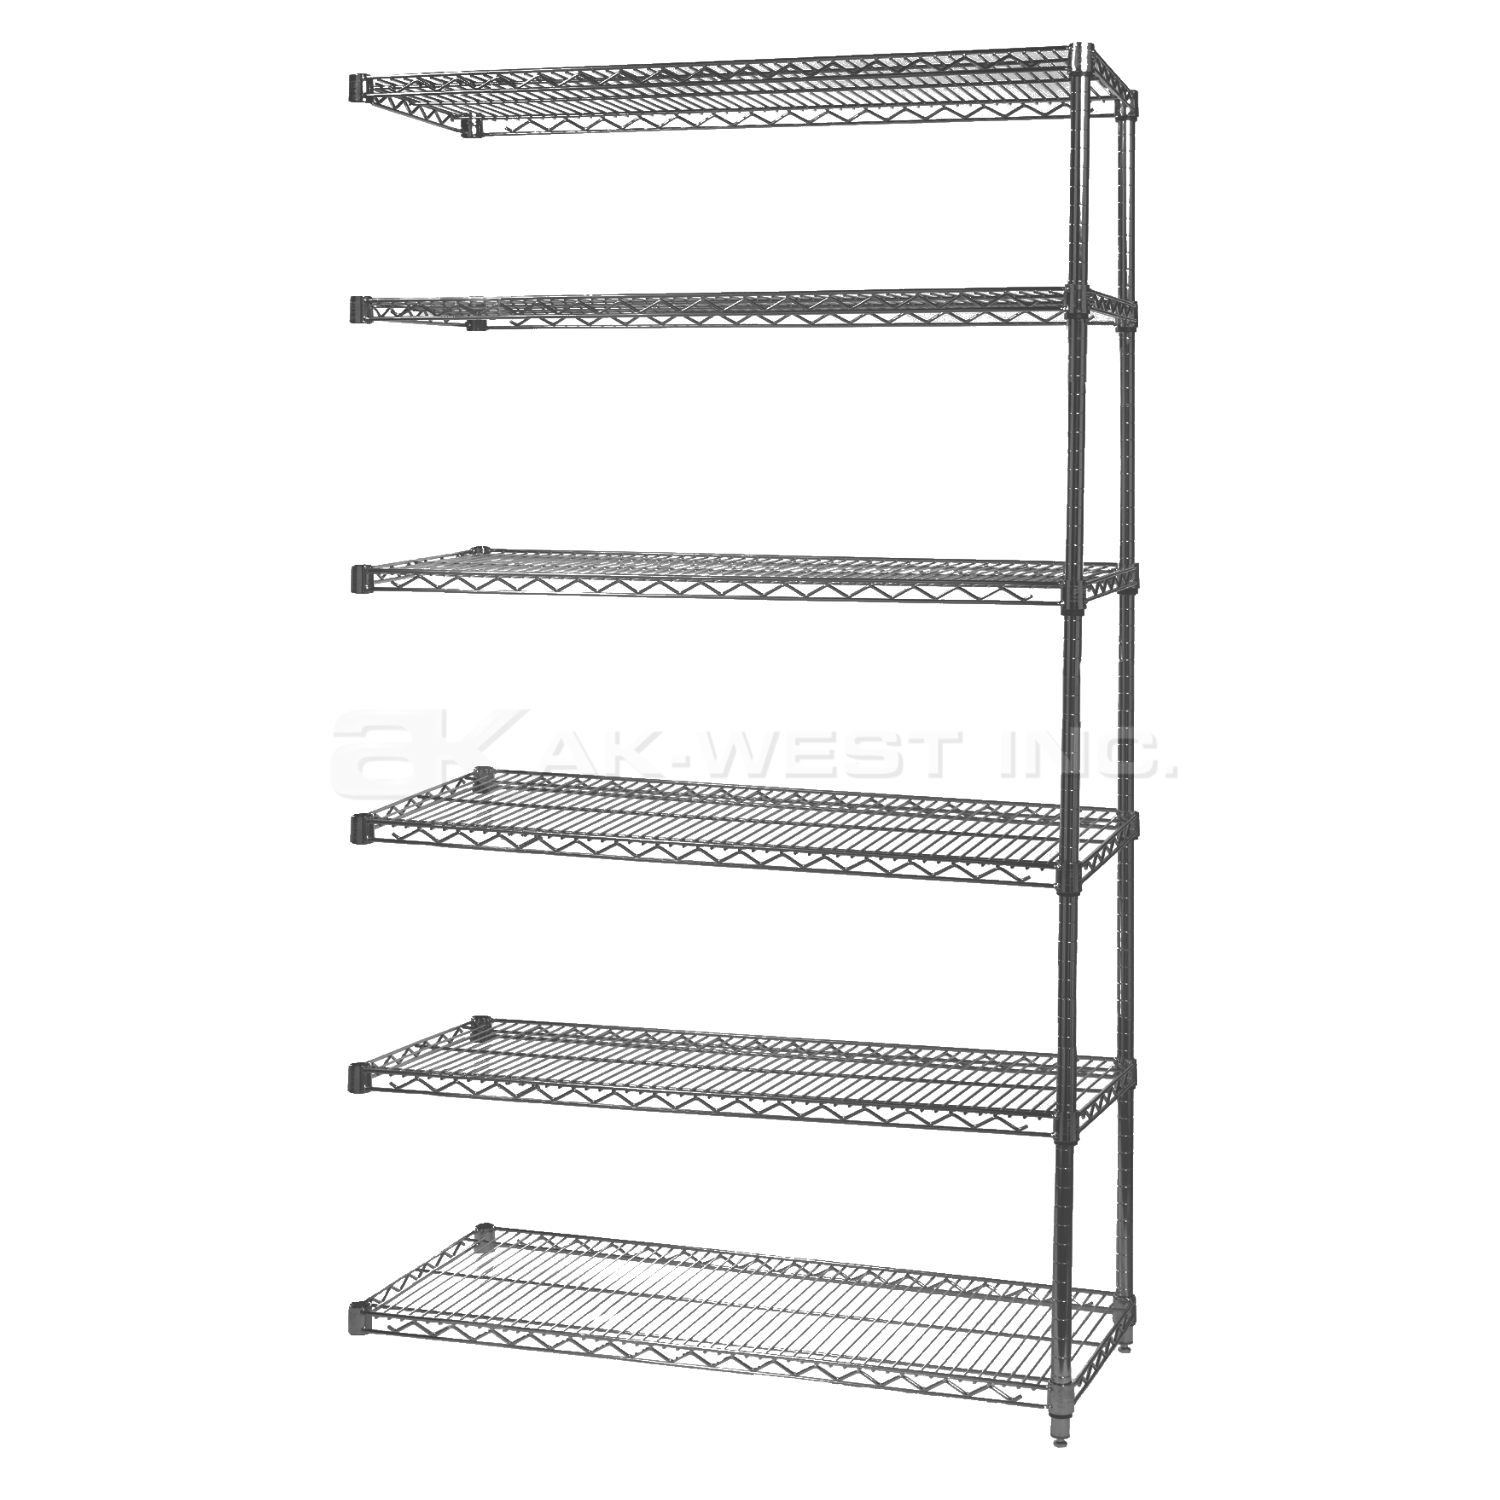 Grey, 18"D x 48"W x 54"H, 6 Shelf, Wire Shelving Adder Kit